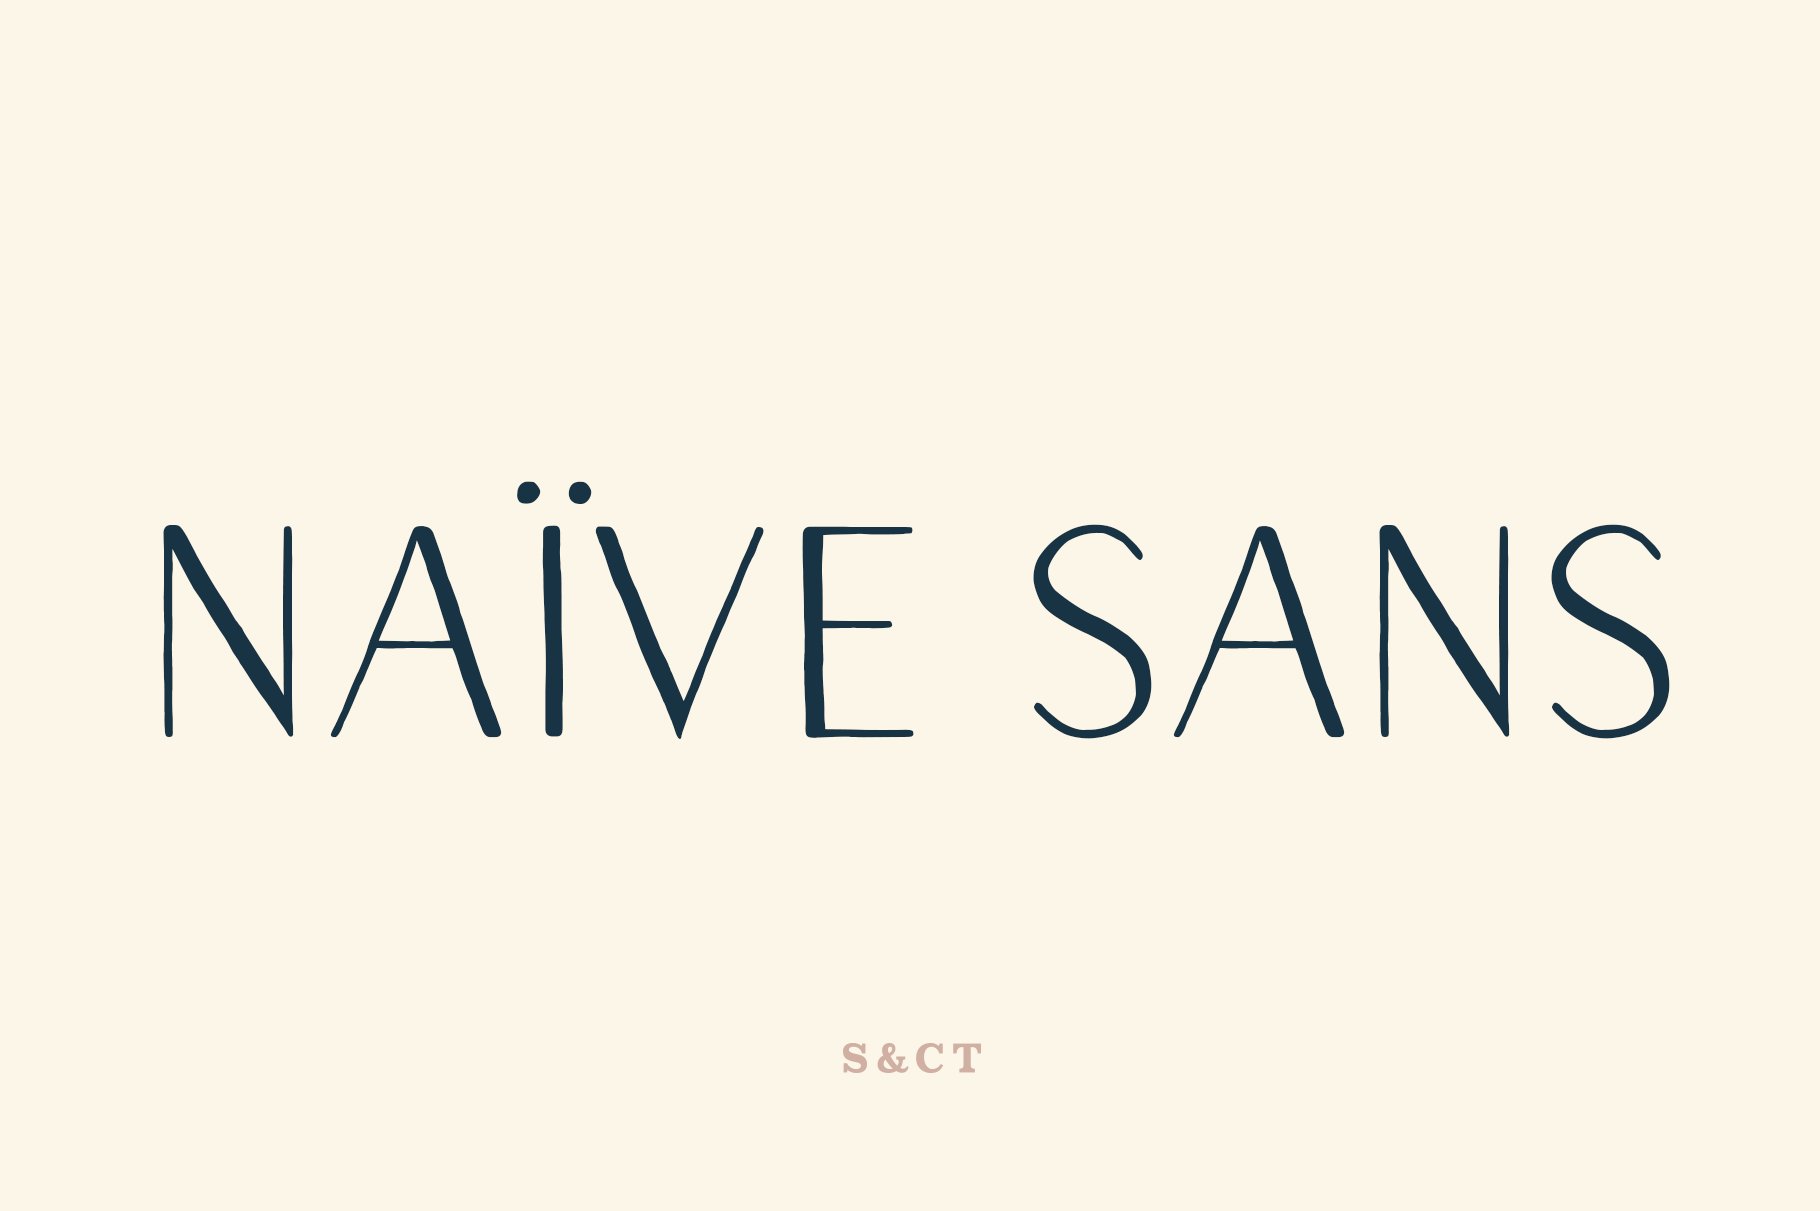 Naive Sans Font Collection cover image.